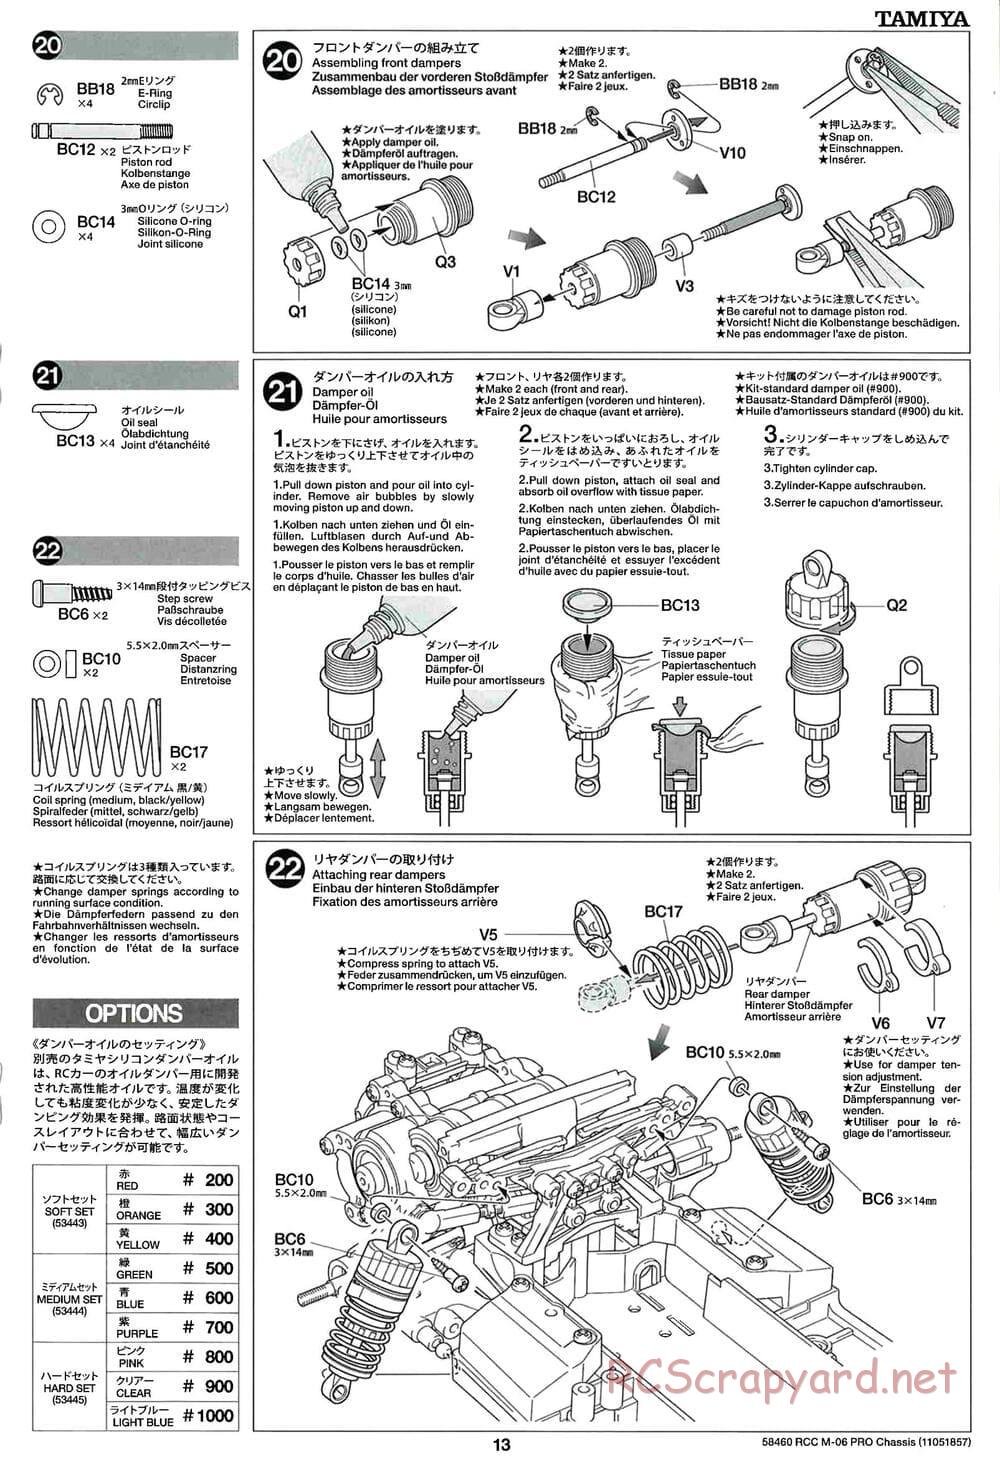 Tamiya - M-06 Pro Chassis - Manual - Page 13